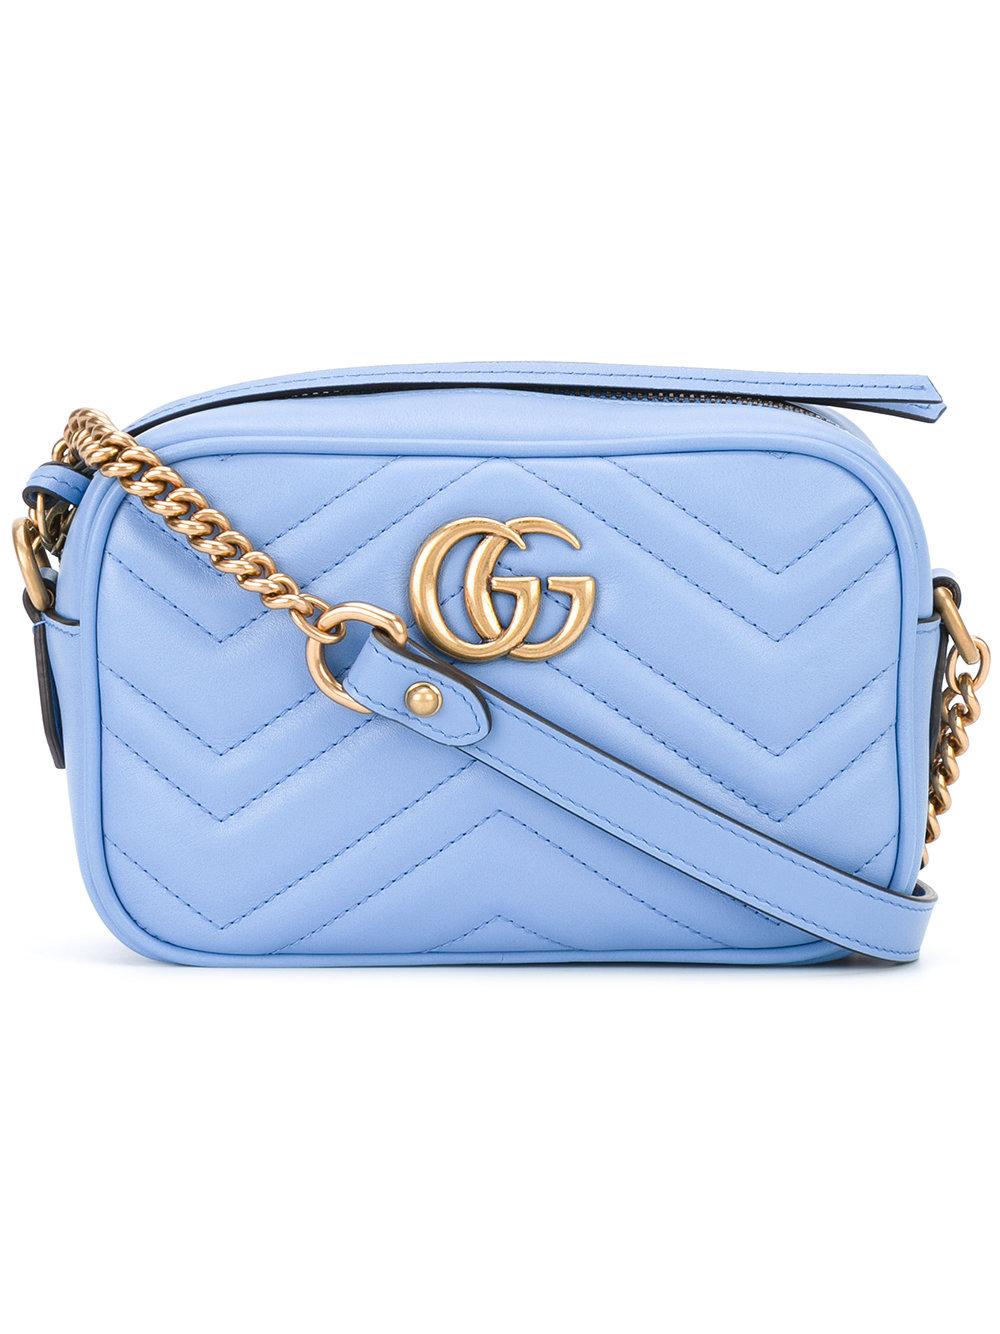 Lyst - Gucci Gg Marmont Shoulder Bag in Blue